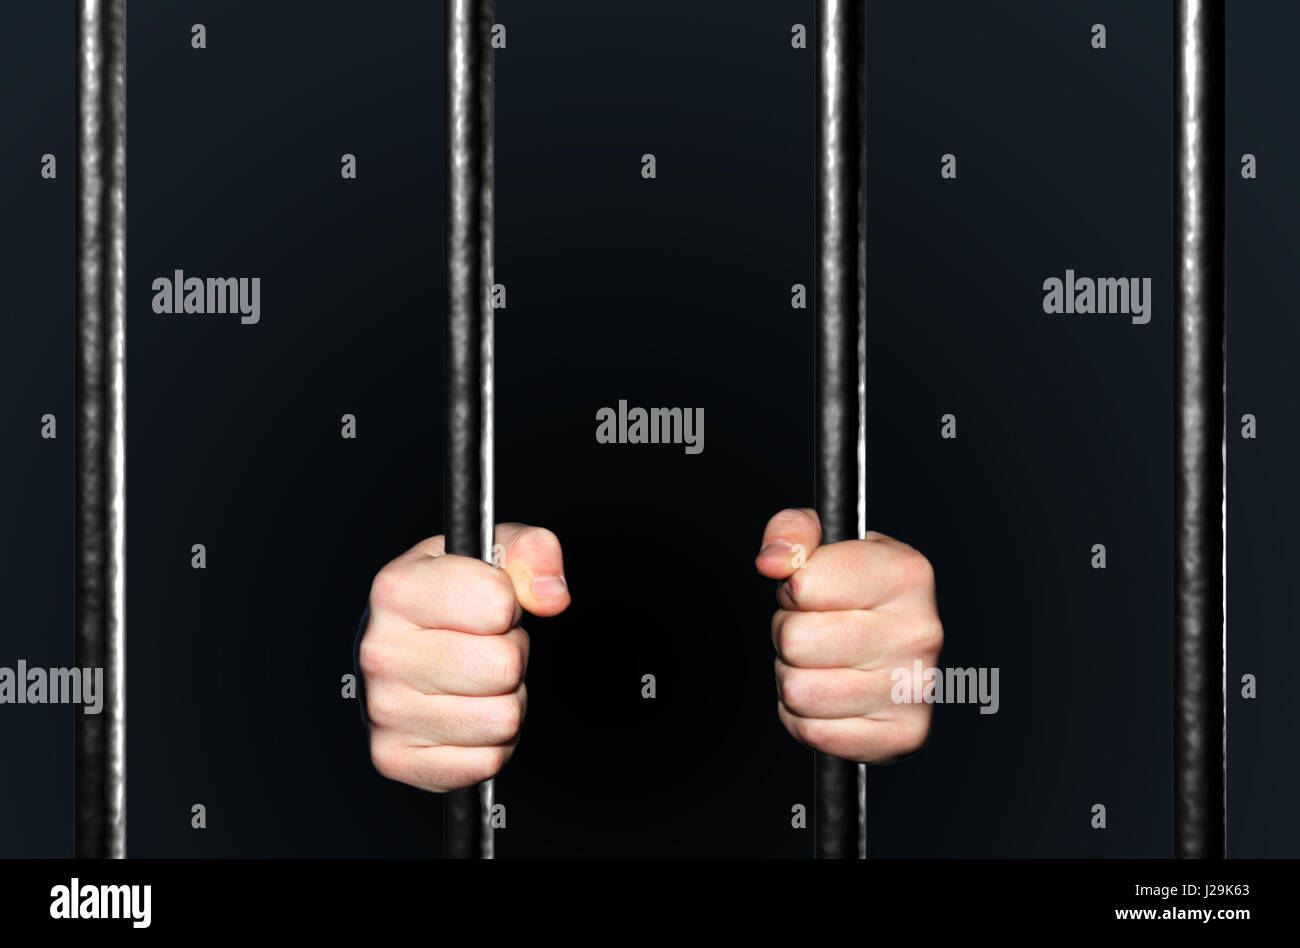 Hands holding Jail Bars, 3d illustration Stock Photo